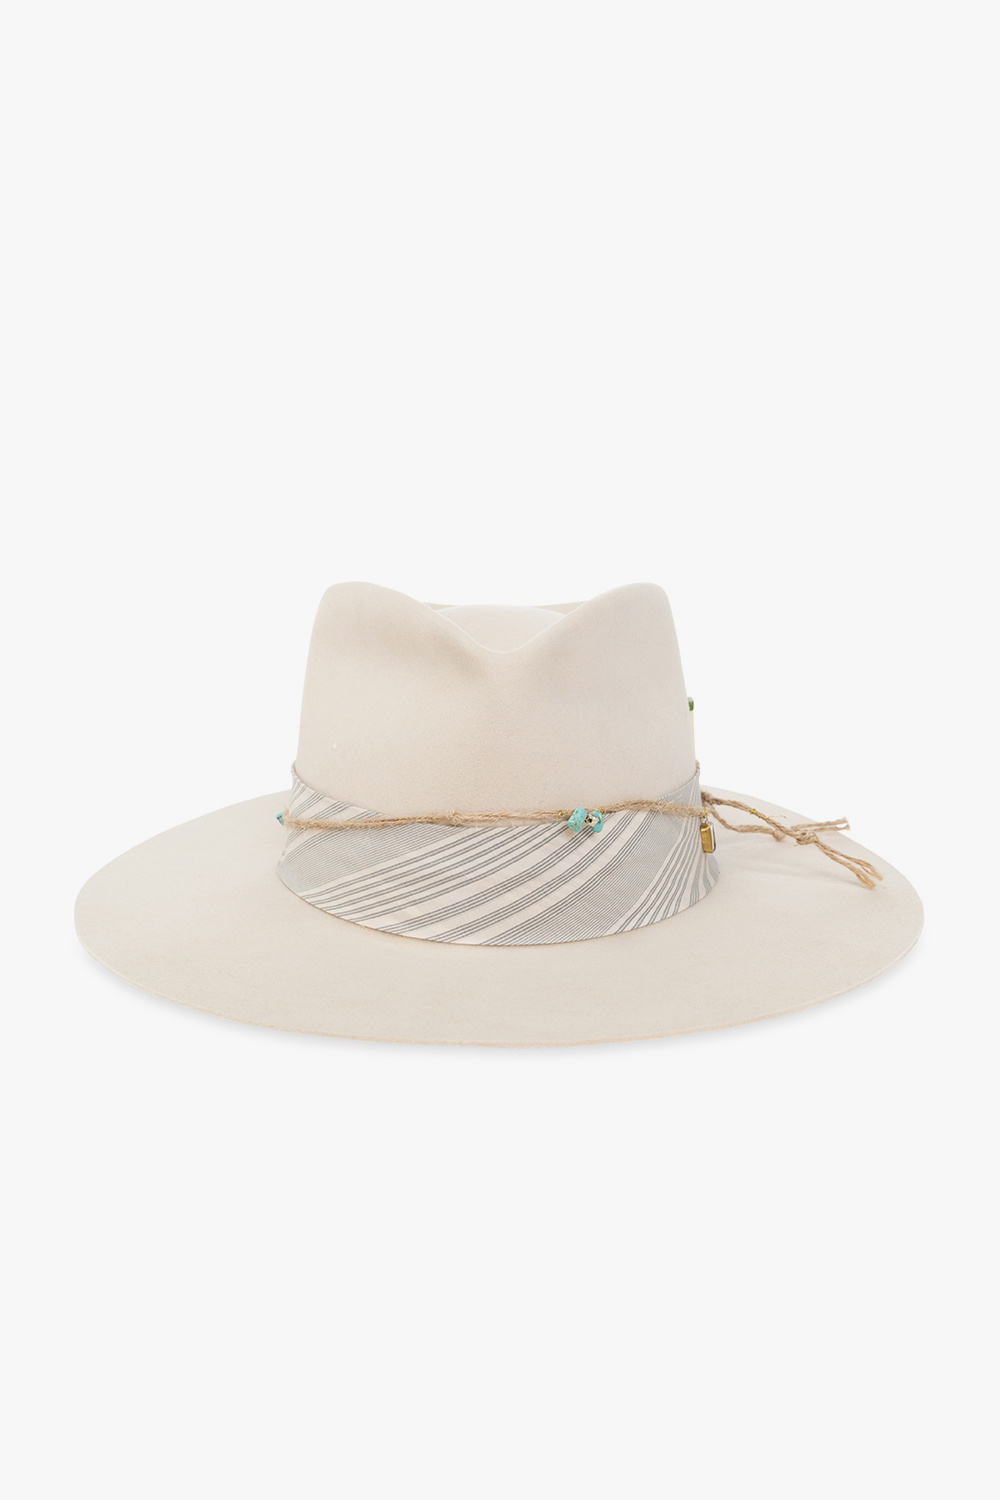 Nick Fouquet ‘Toledo’ felt hat